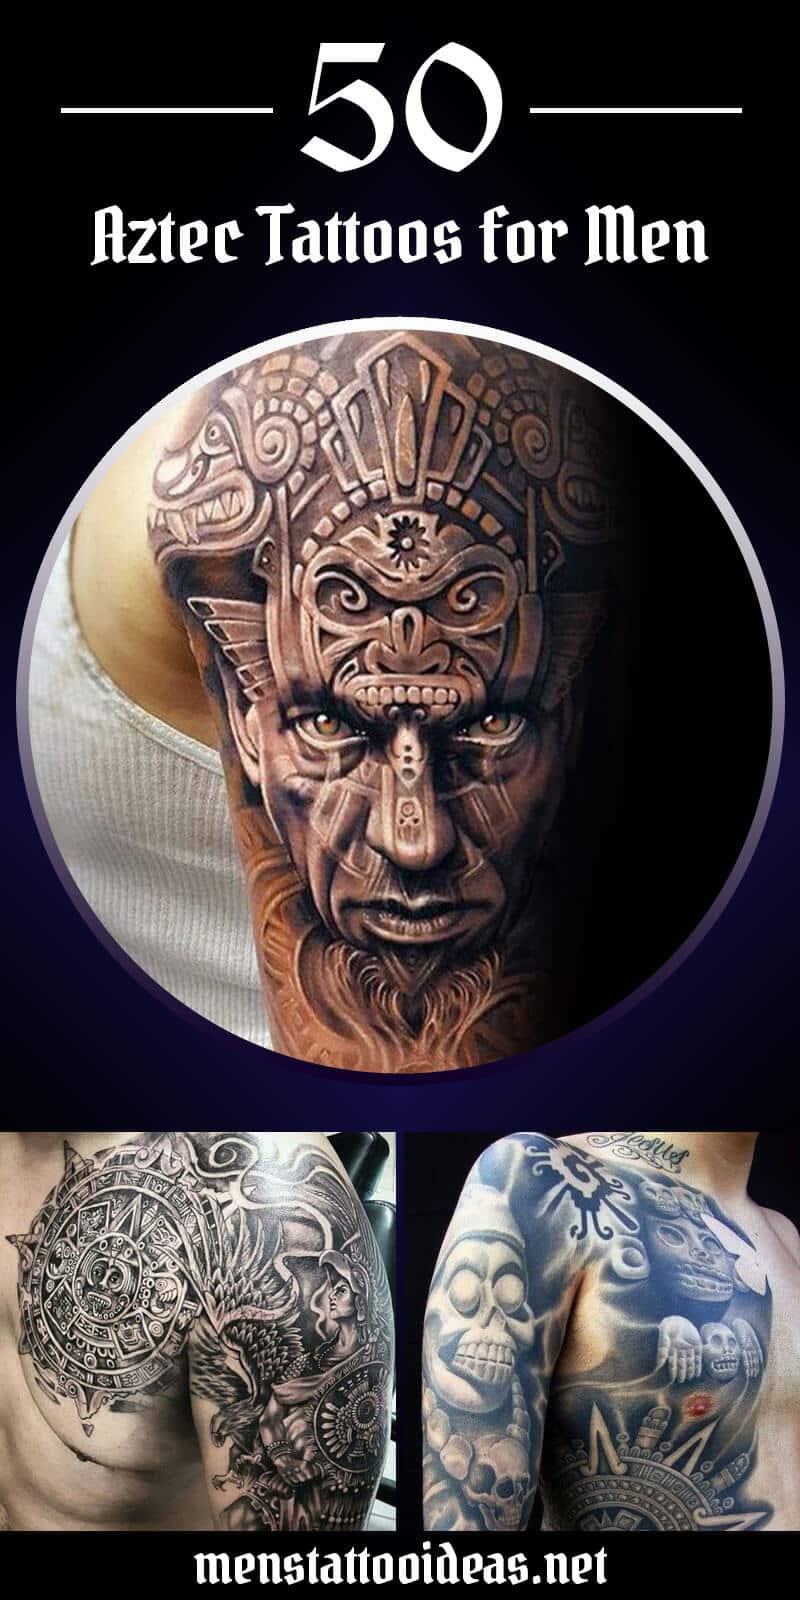 aztec-tattoos-for-men